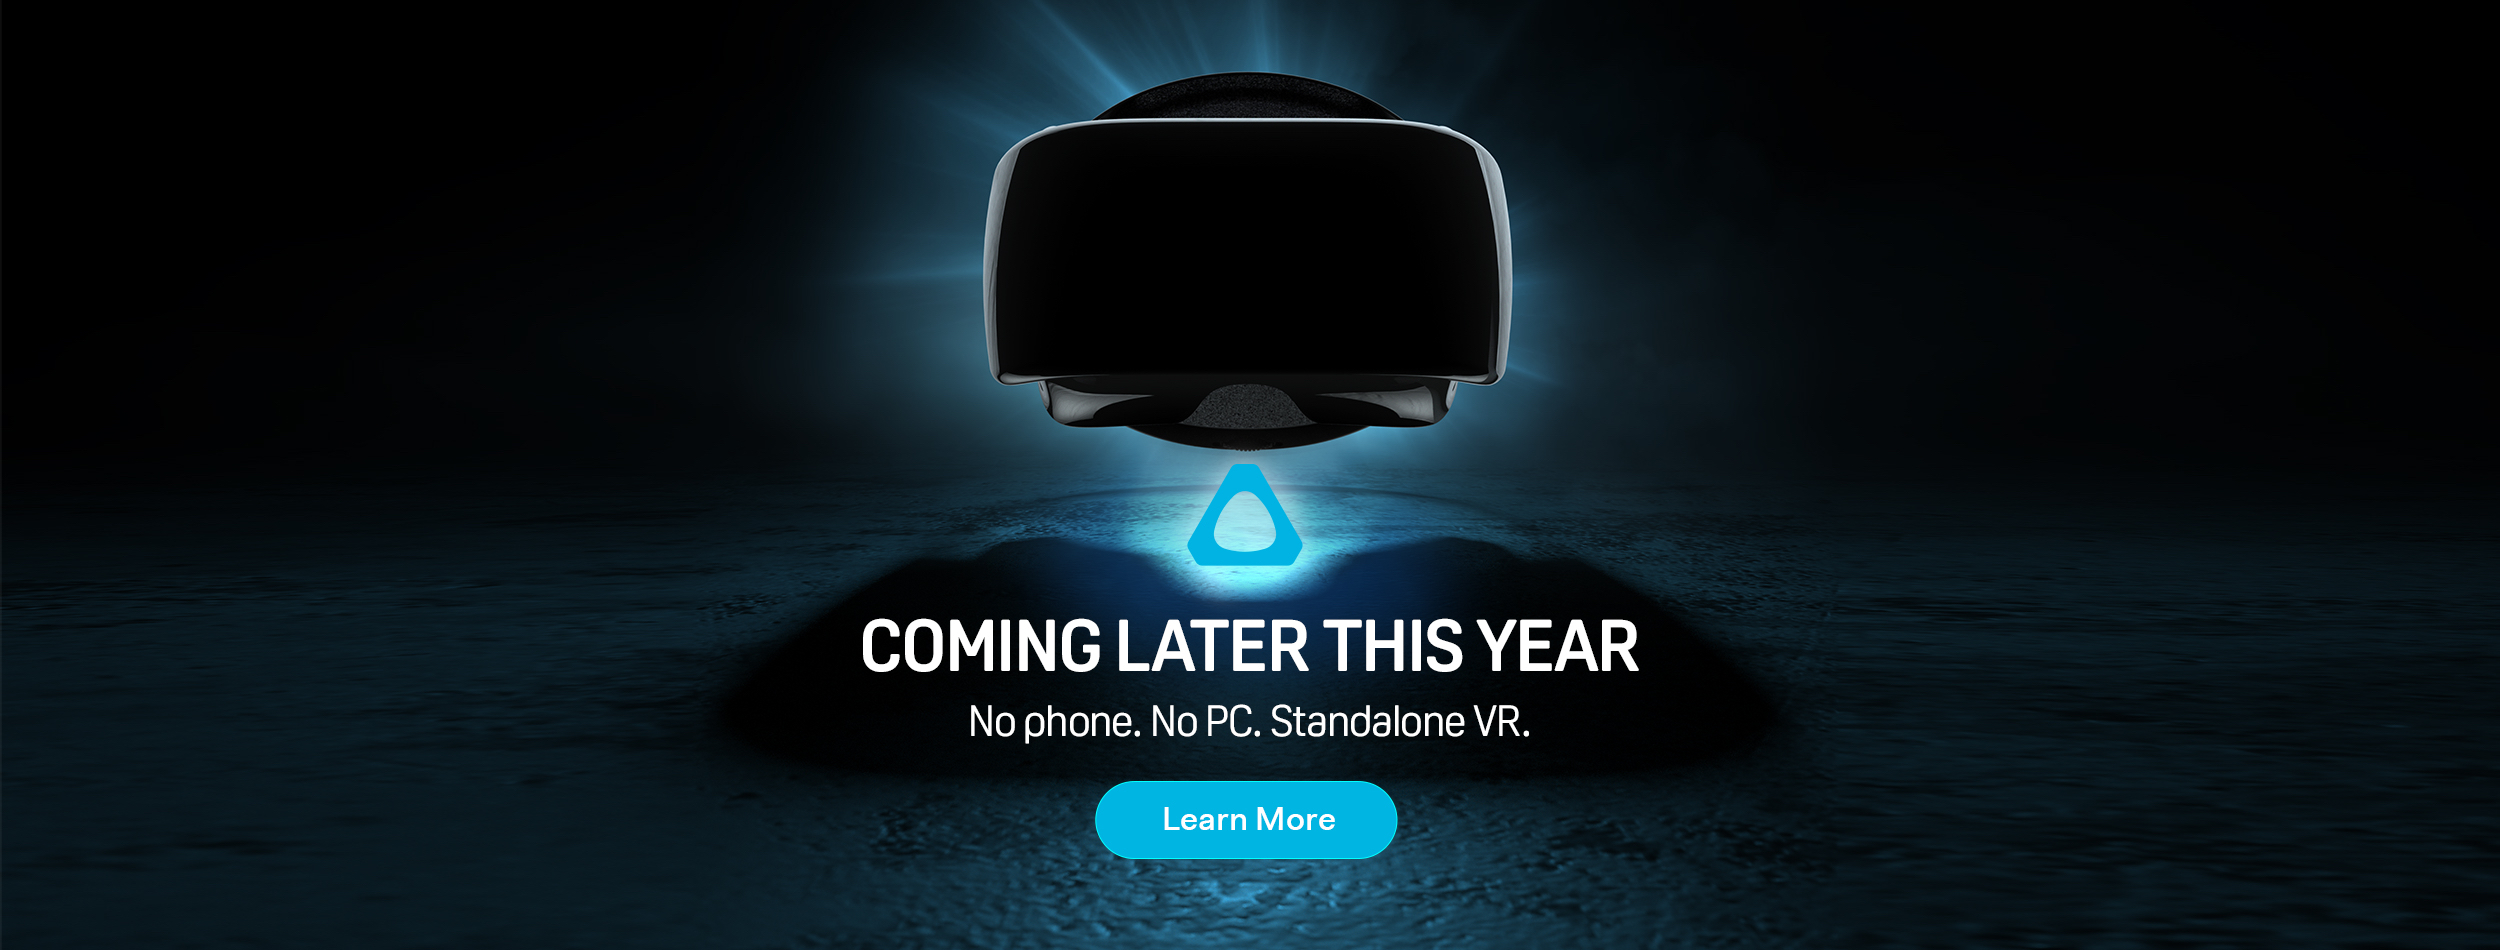 Vive-Standalone-VR-Product-3.jpg